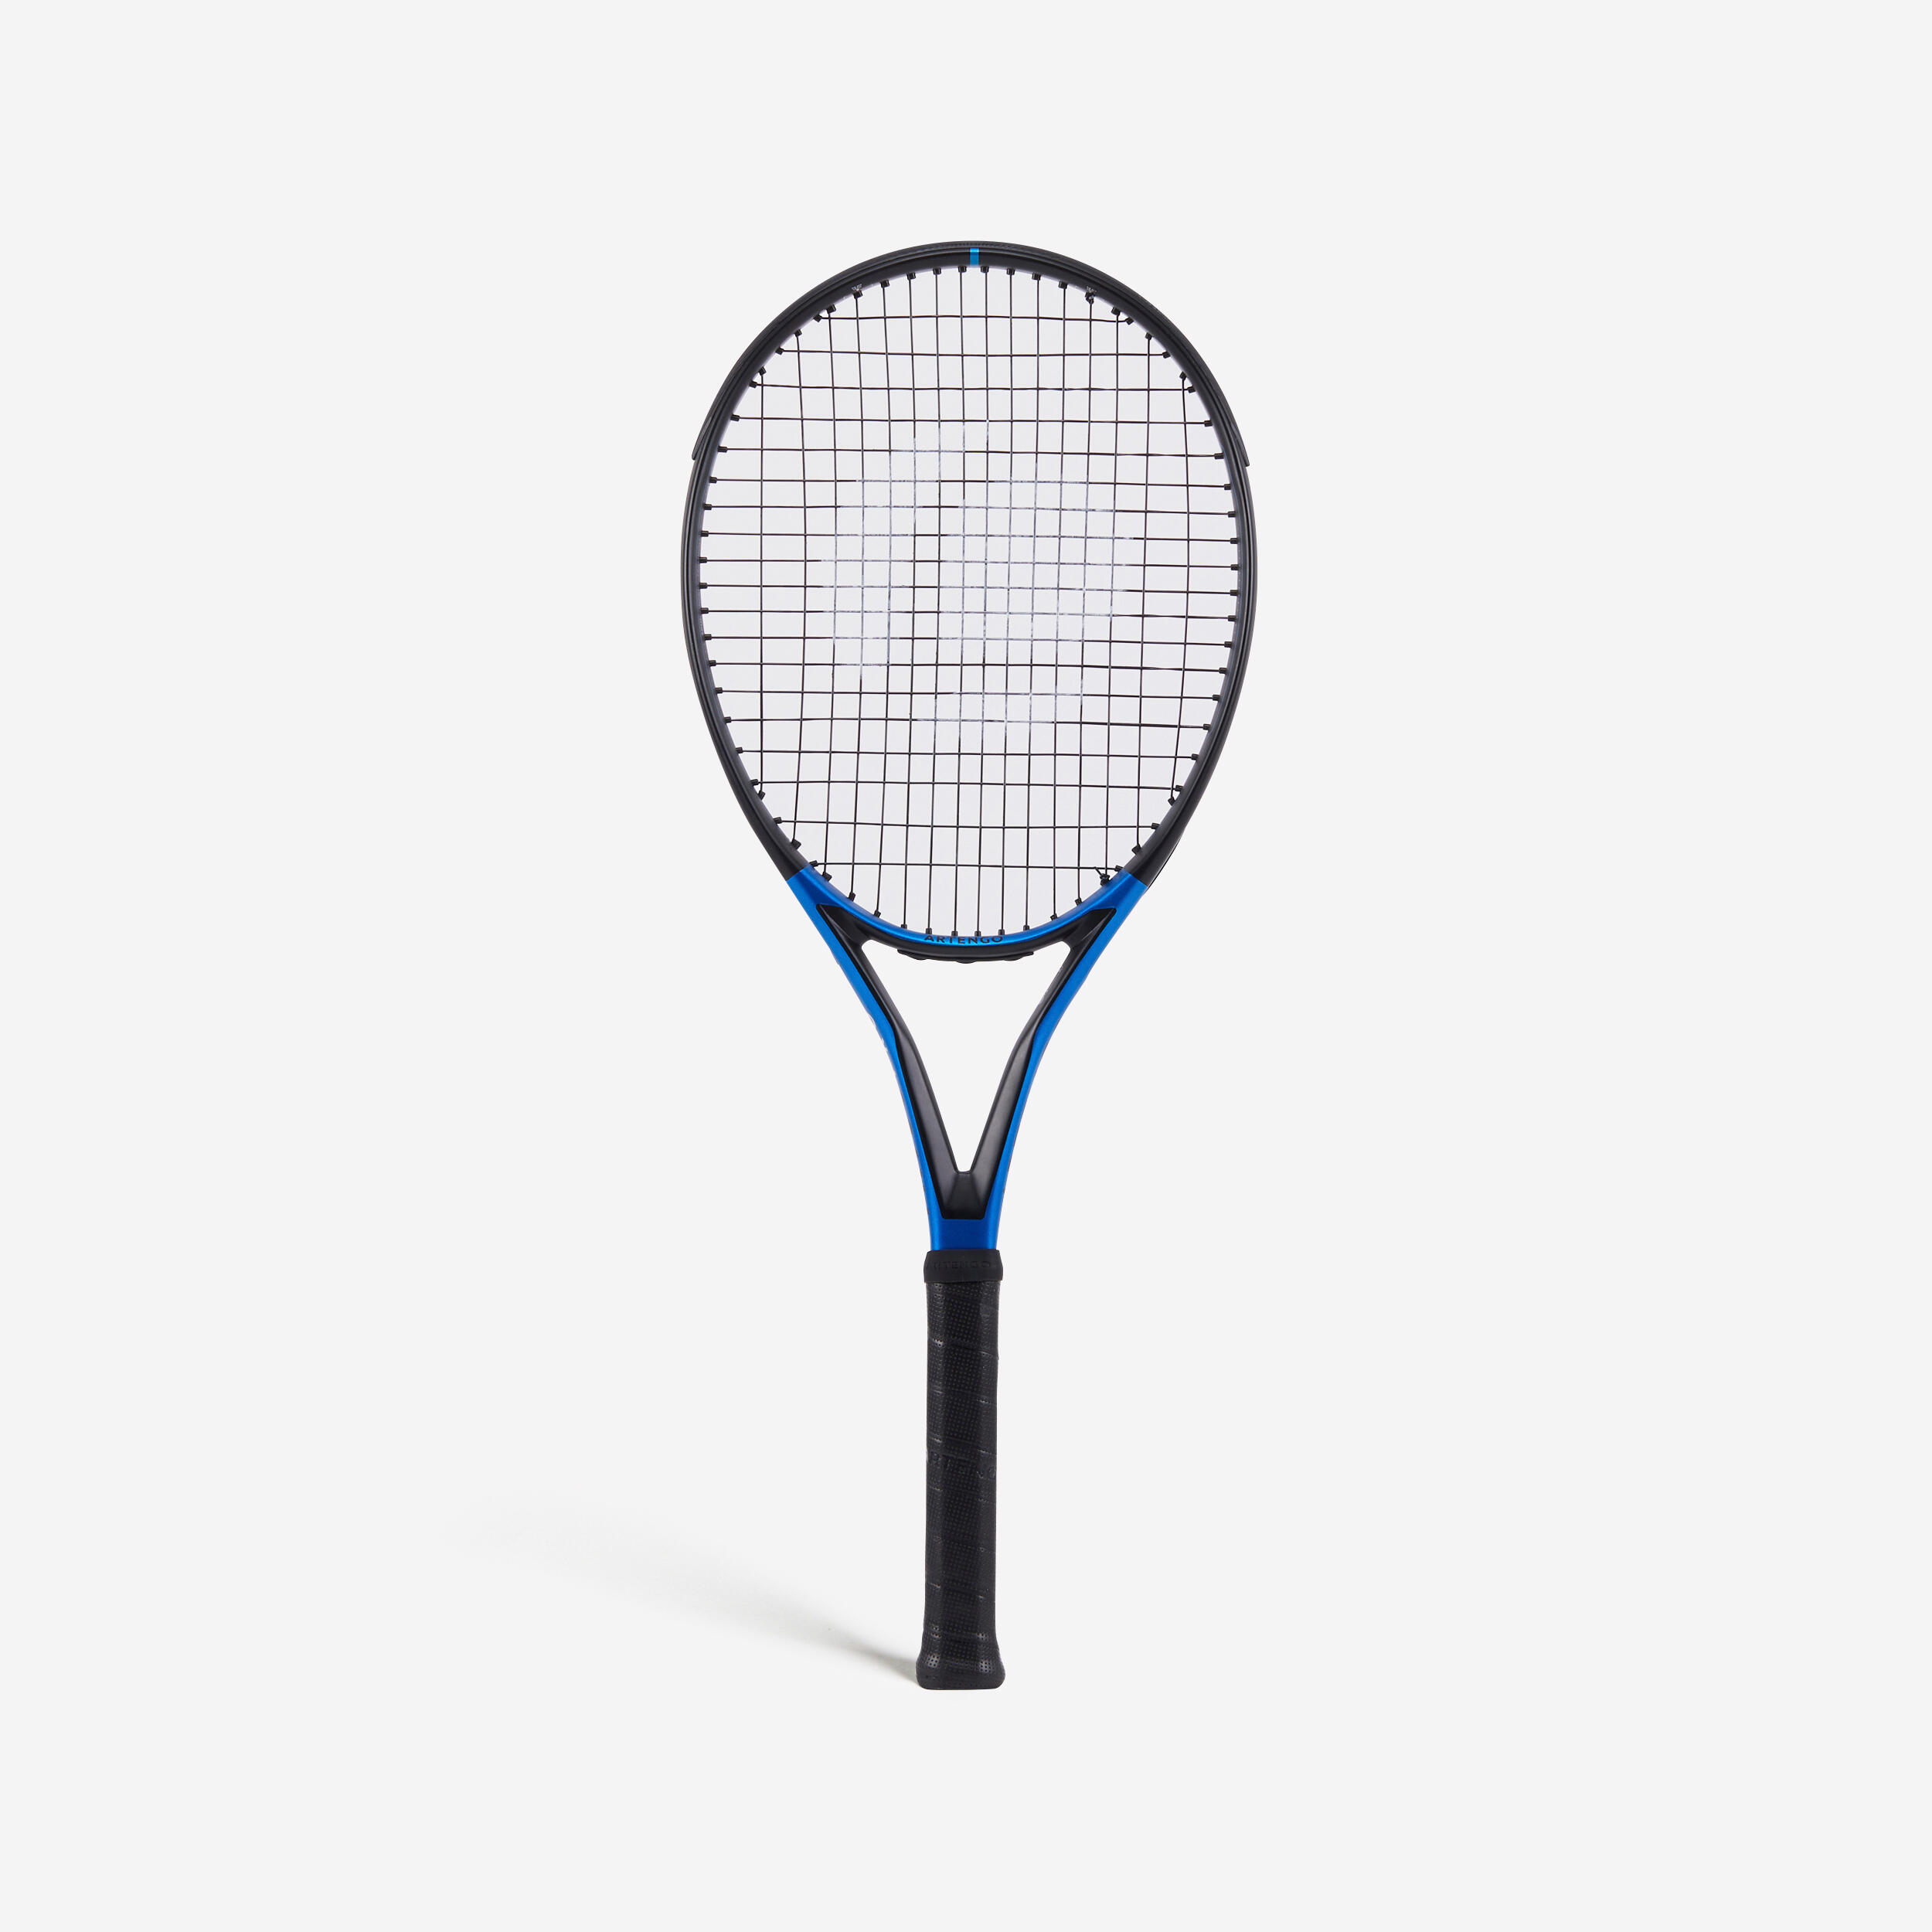 Adult Tennis Racket Spin Pro TR930 300g - Black/Blue 1/8